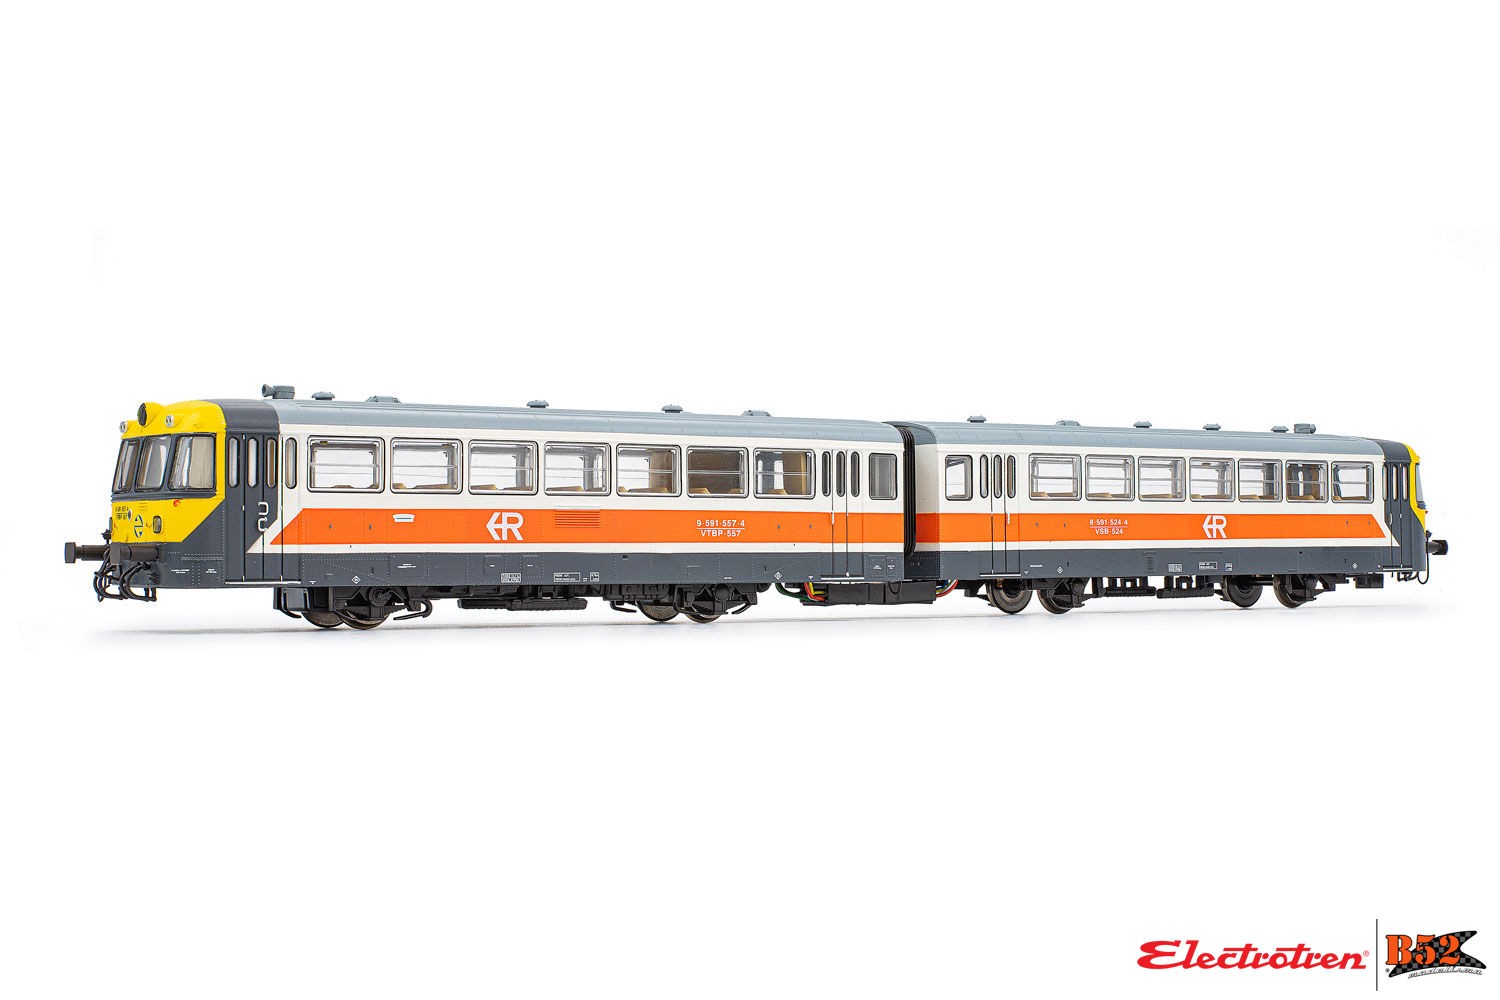 Electrotren HO - Railcar "Ferrobus" Class 591.500, RENFE: HE2002